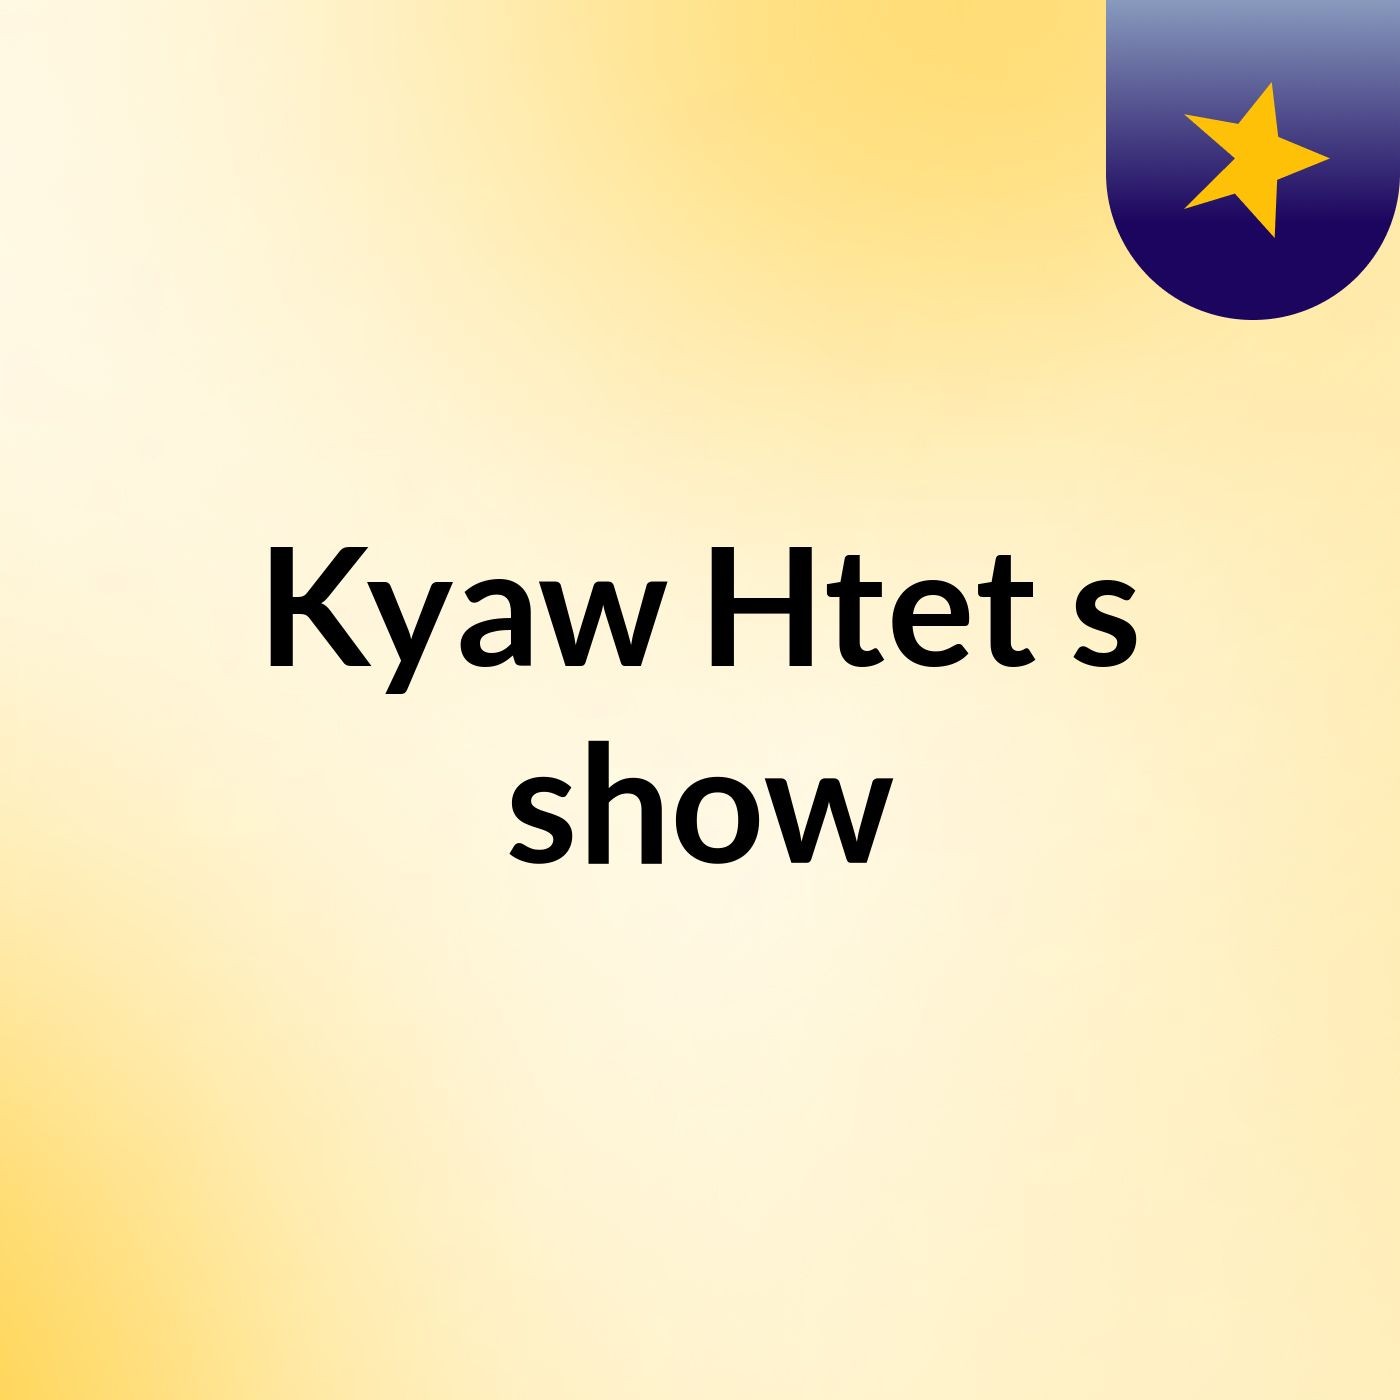 Kyaw Htet's show